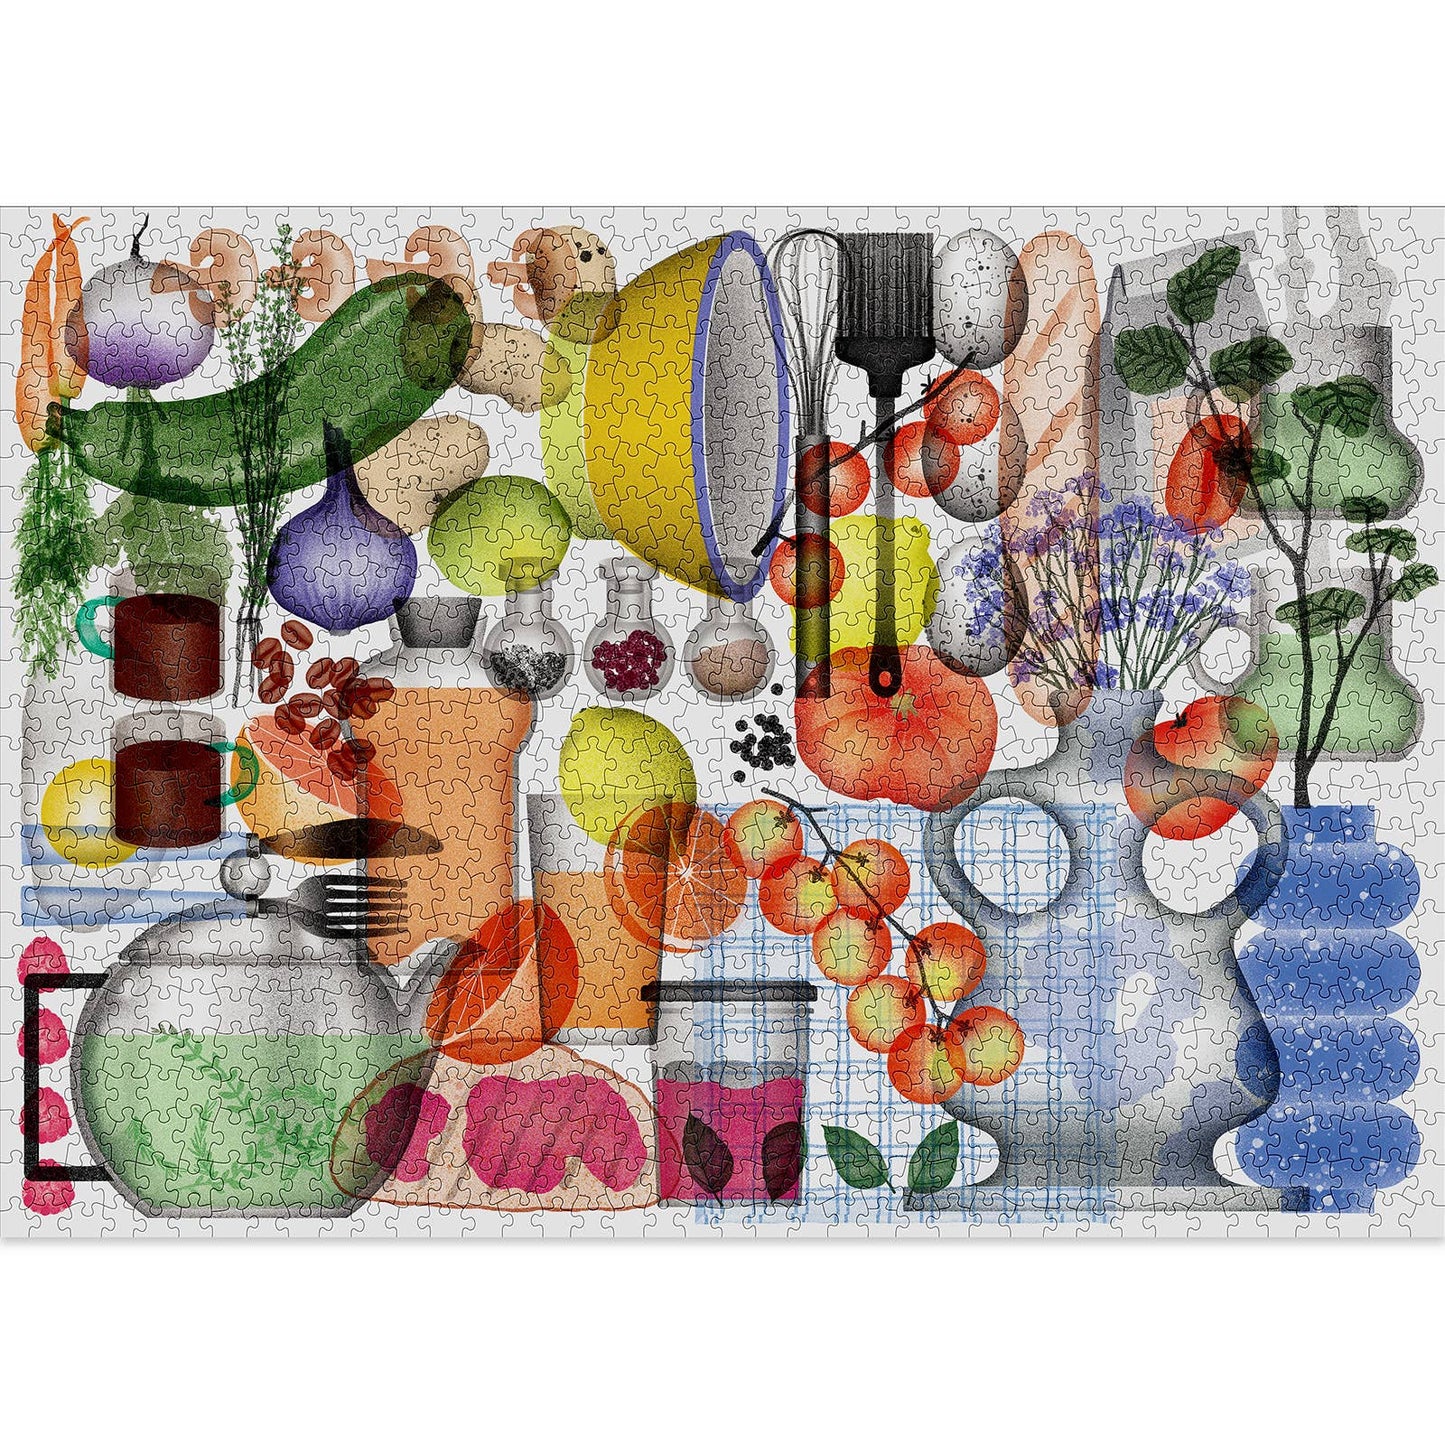 Cloudberries - Kitchen - 1000 Piece Random Cut Jigsaw Puzzle